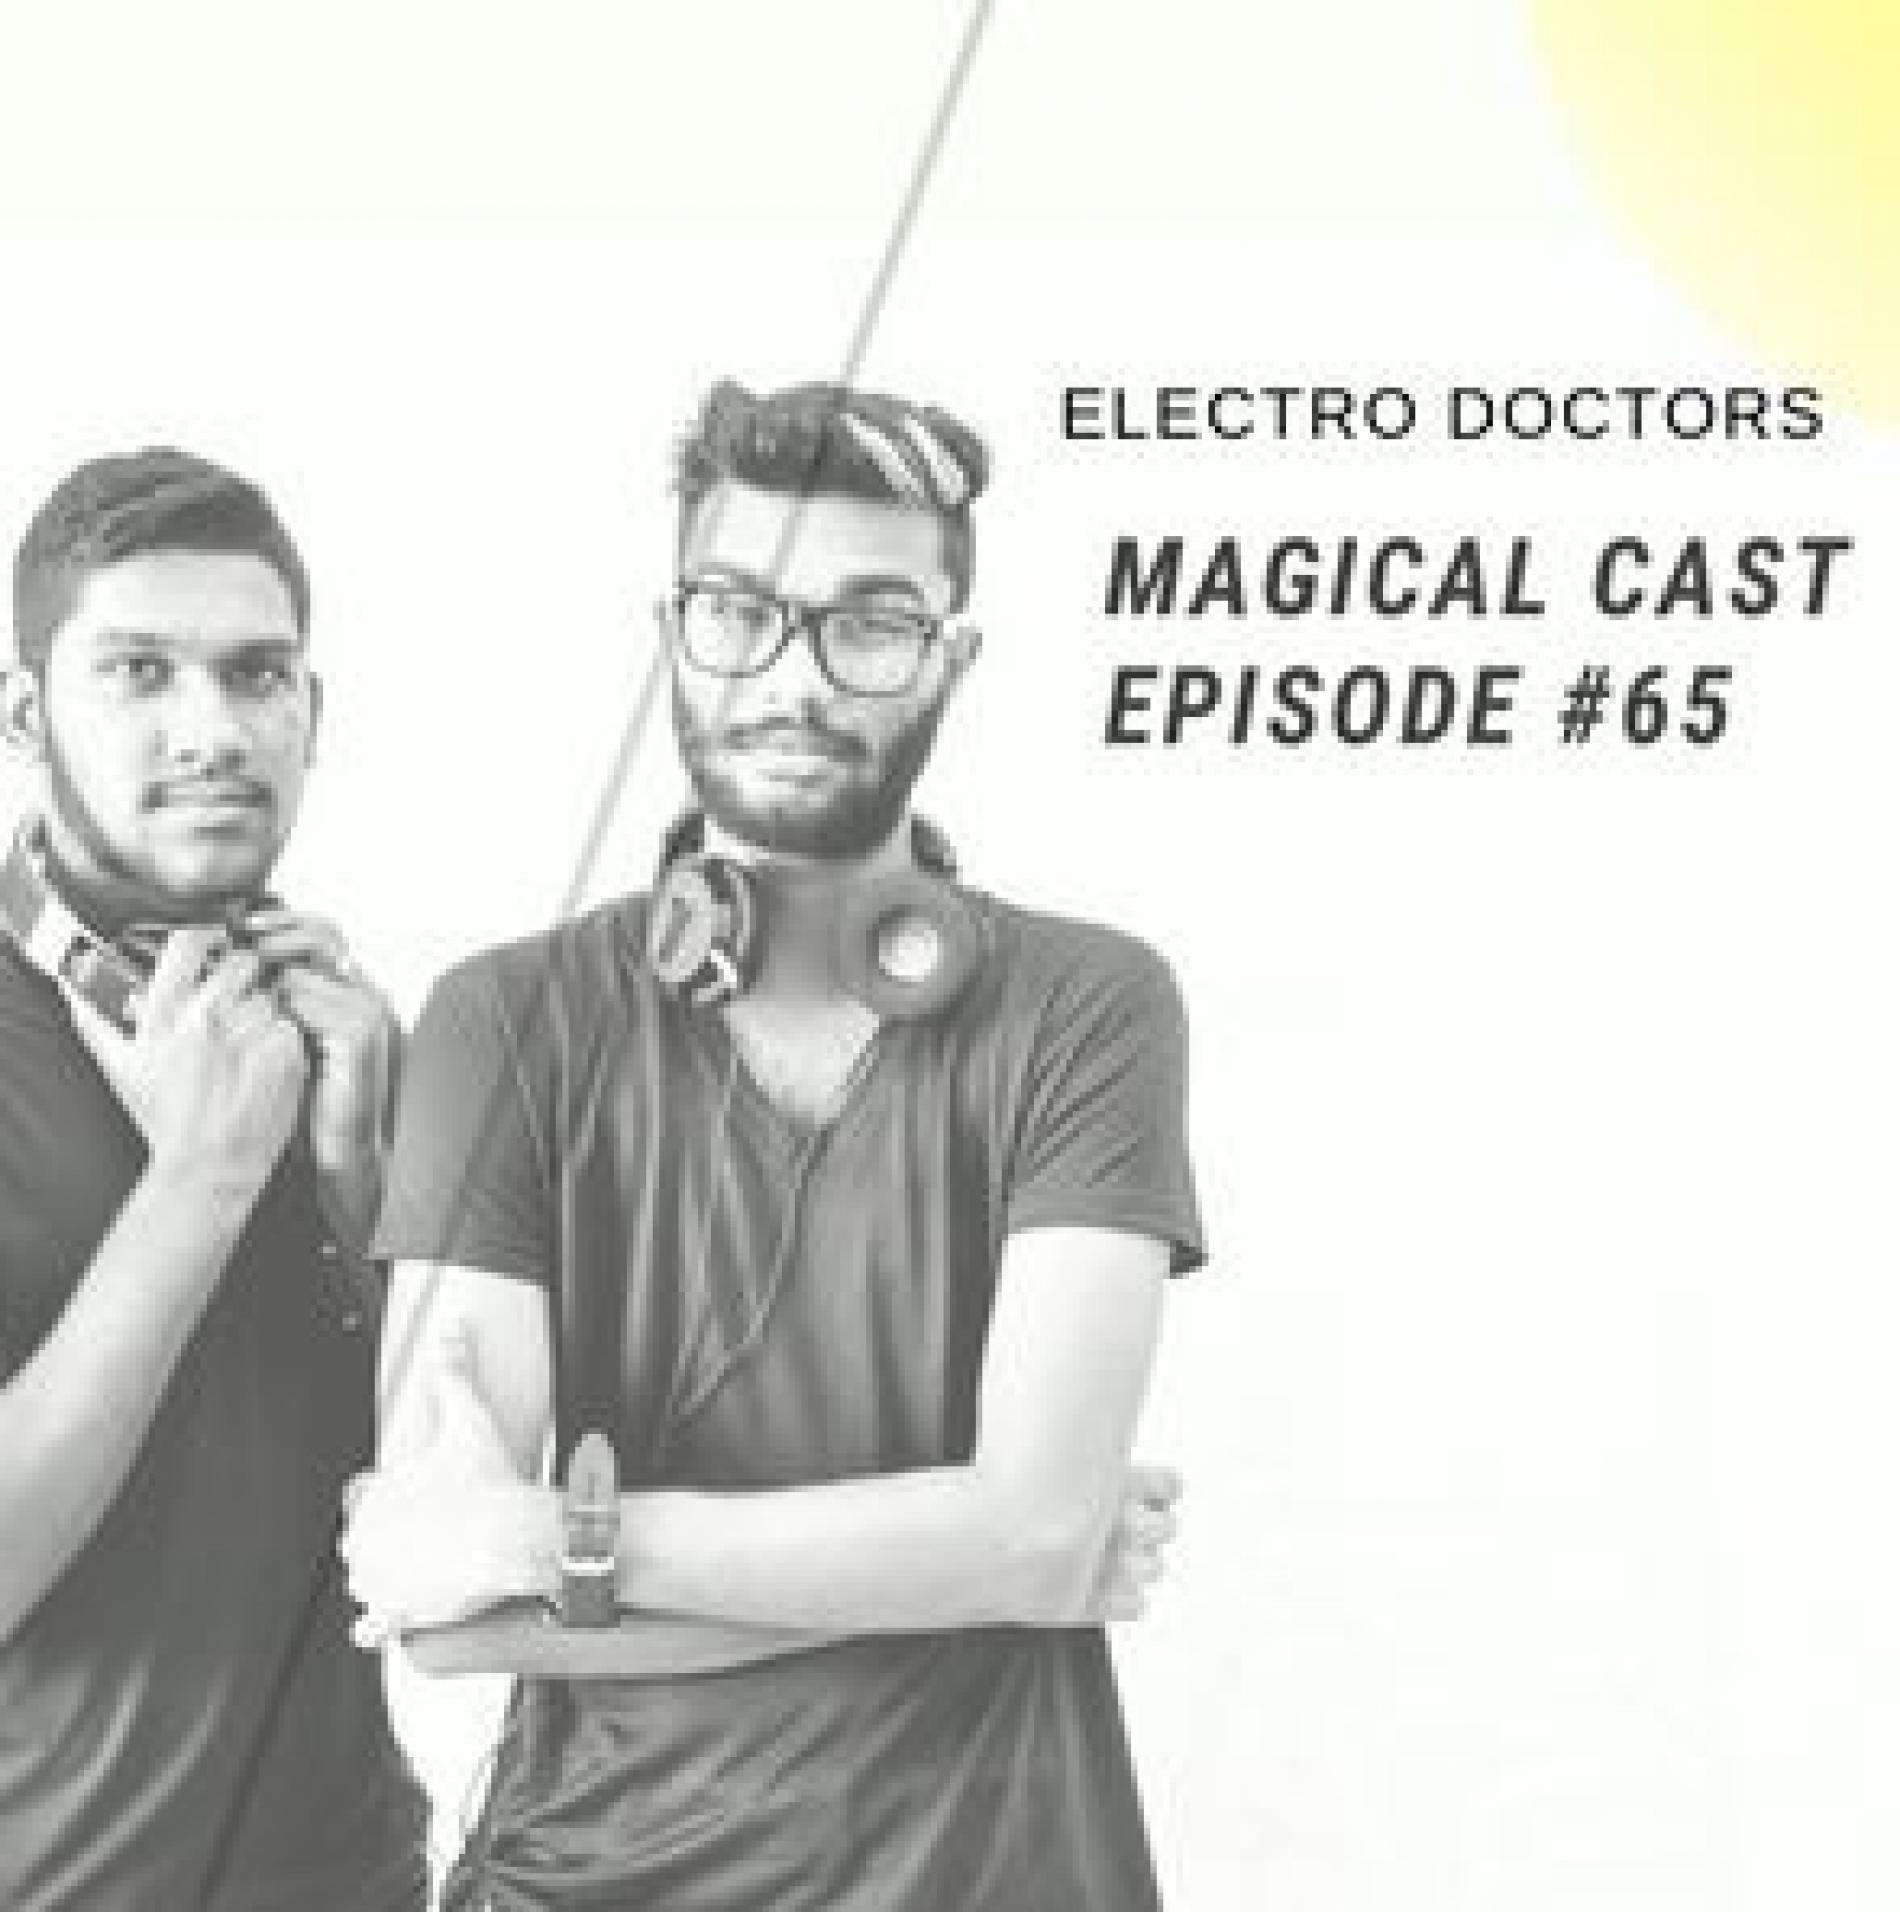 Electro Doctors : Magical Cast Episode #65